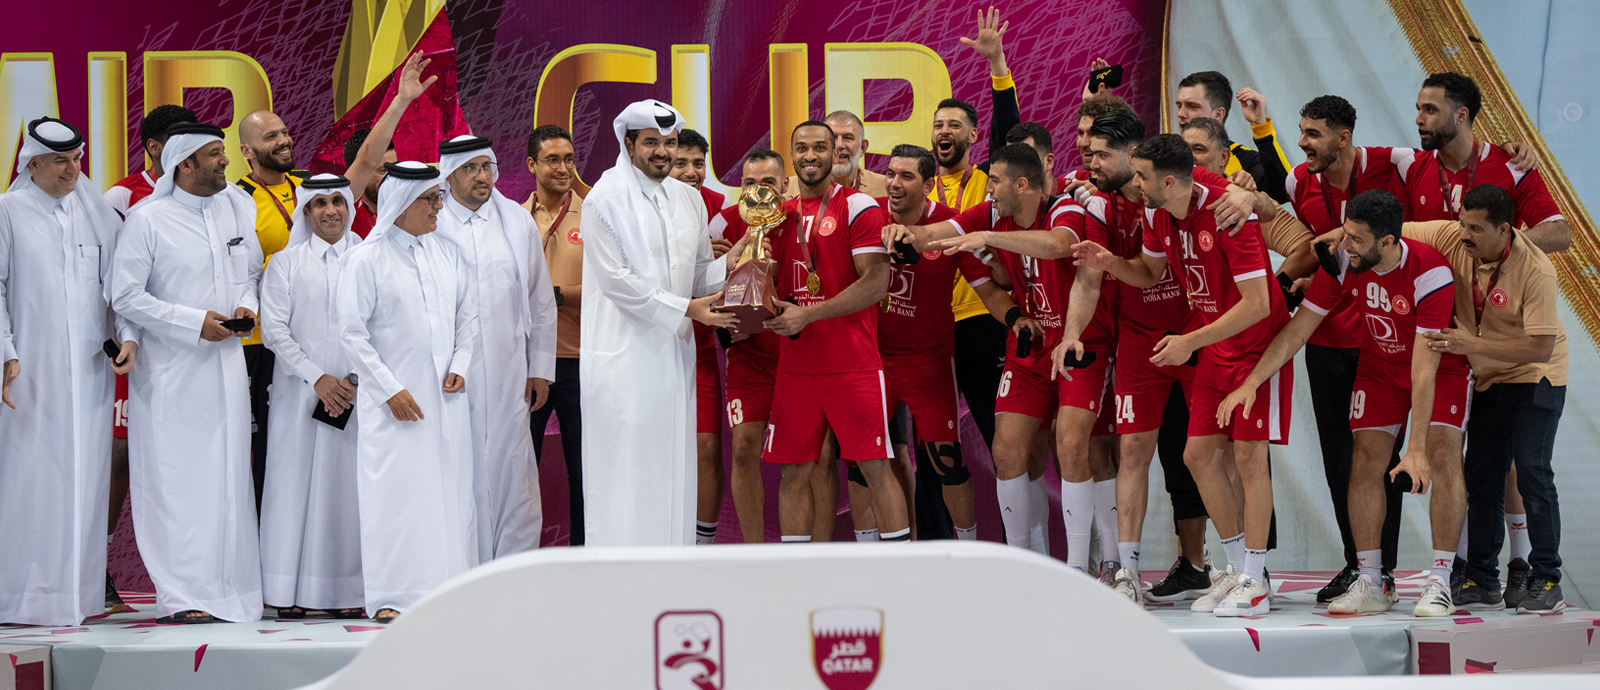 Sheikh Joaan Crowns Al Arabi Champion of HH the Amir's Handball Cup